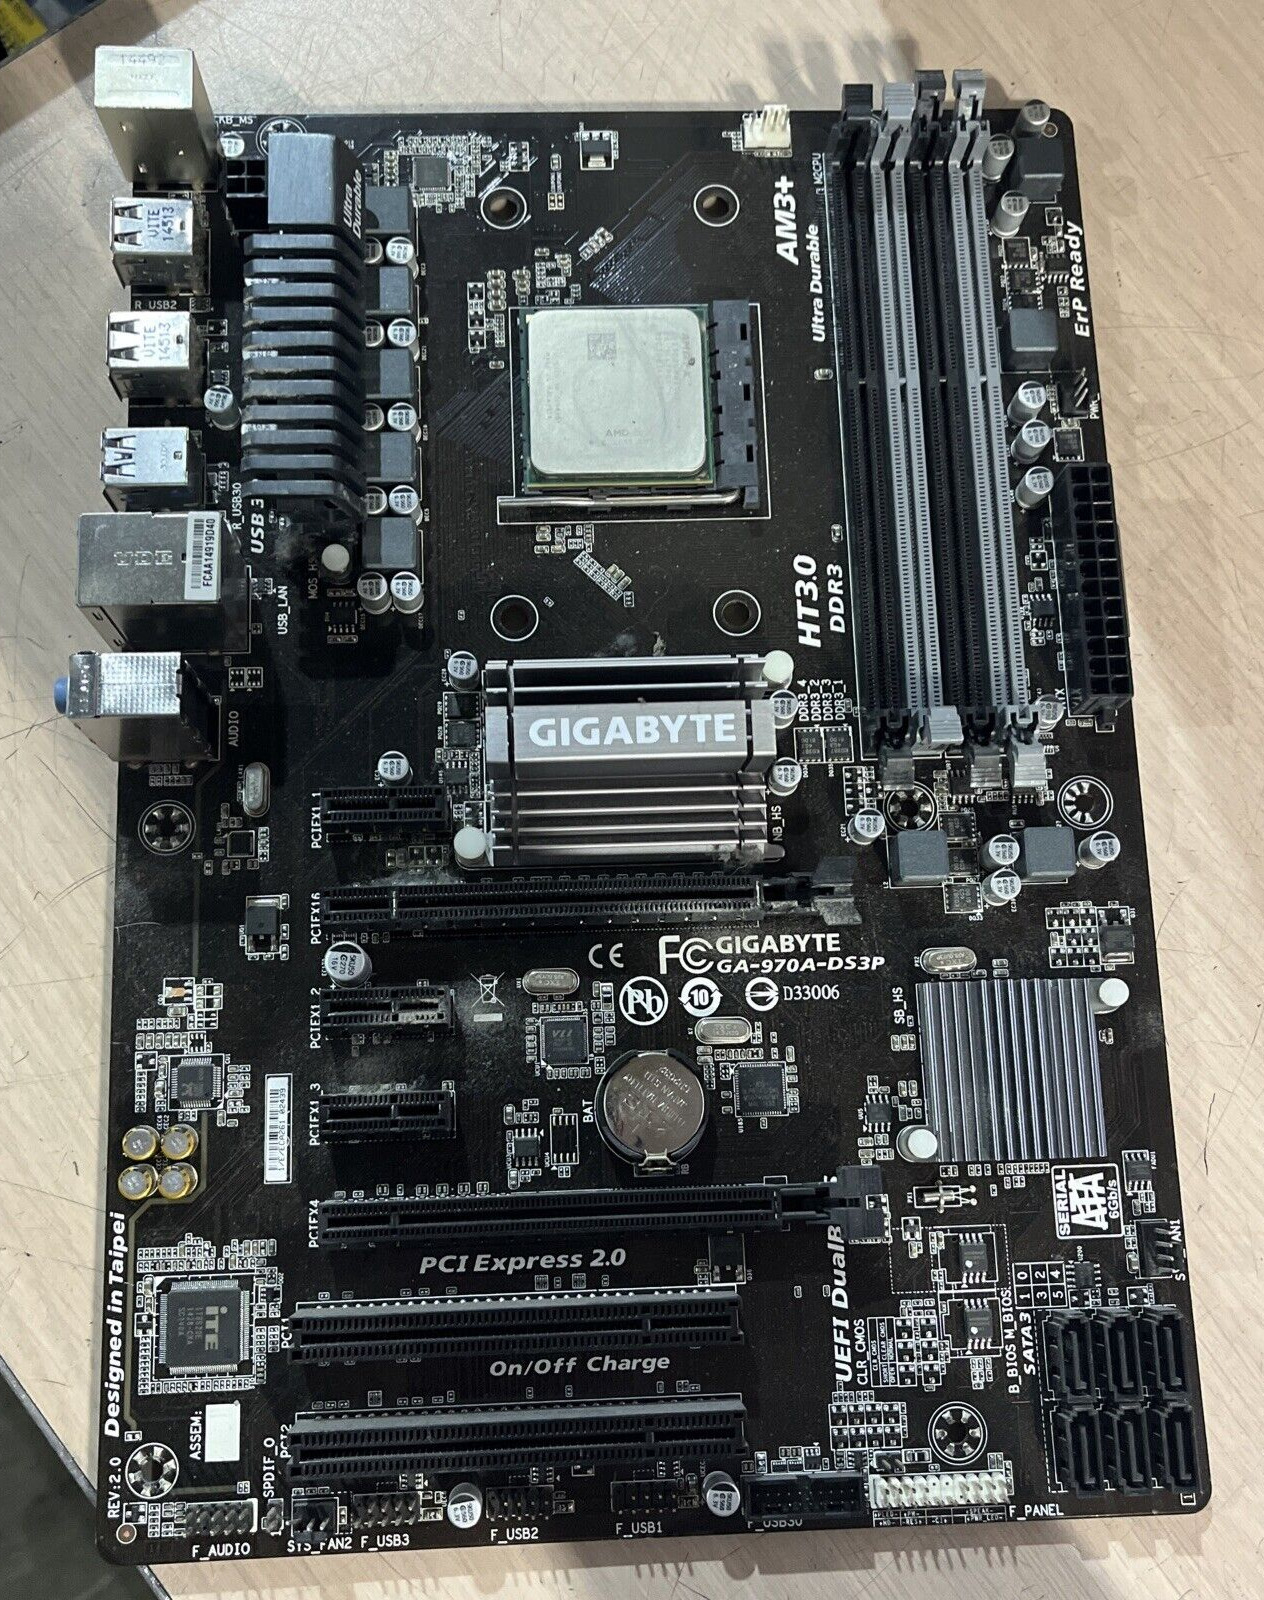 GIGABYTE GA-970A-DS3P AMD FX MOTHERBOARD